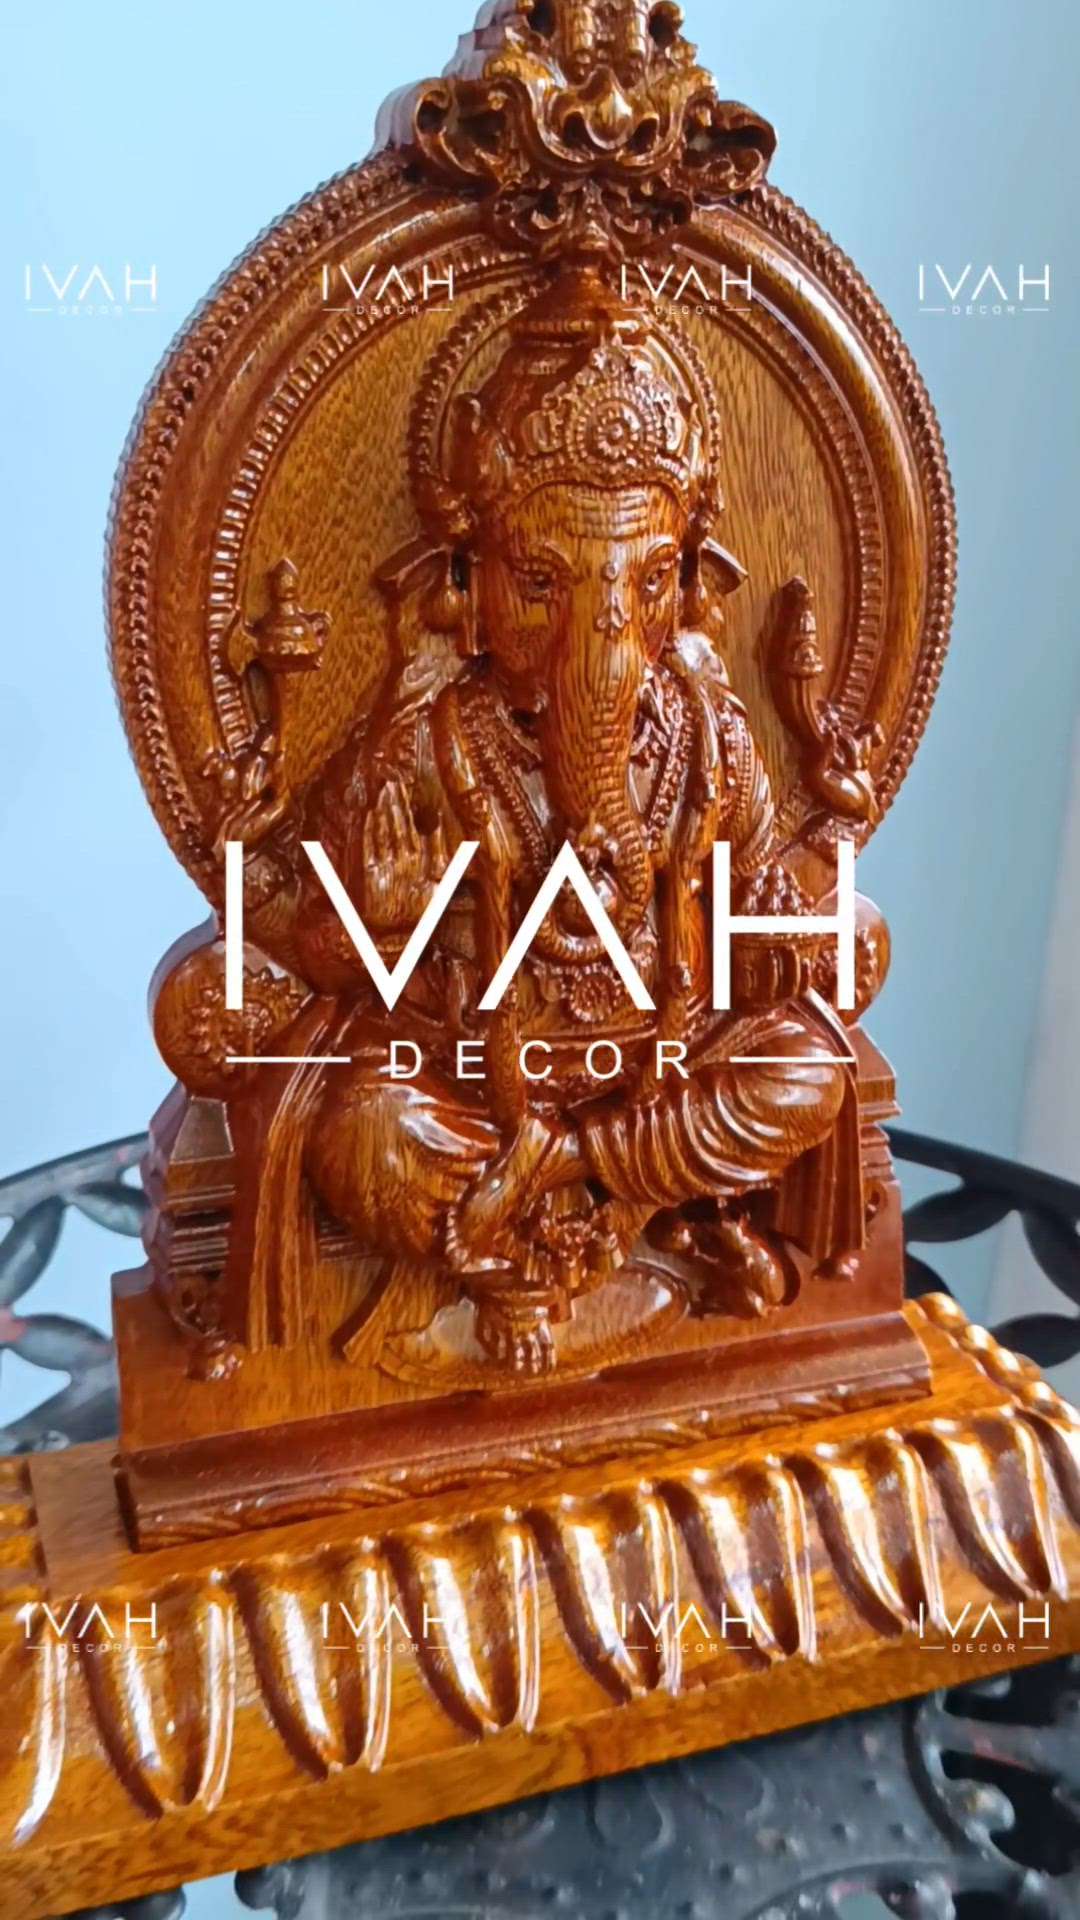 Lord Ganesha Wood Carving
For more details plz whatsApp Or call us +917561091369
 #ivah #ivahdecor #Poojaroom #poojaroomdesign #giftideas #gift #woodcarvingart #Prayerrooms